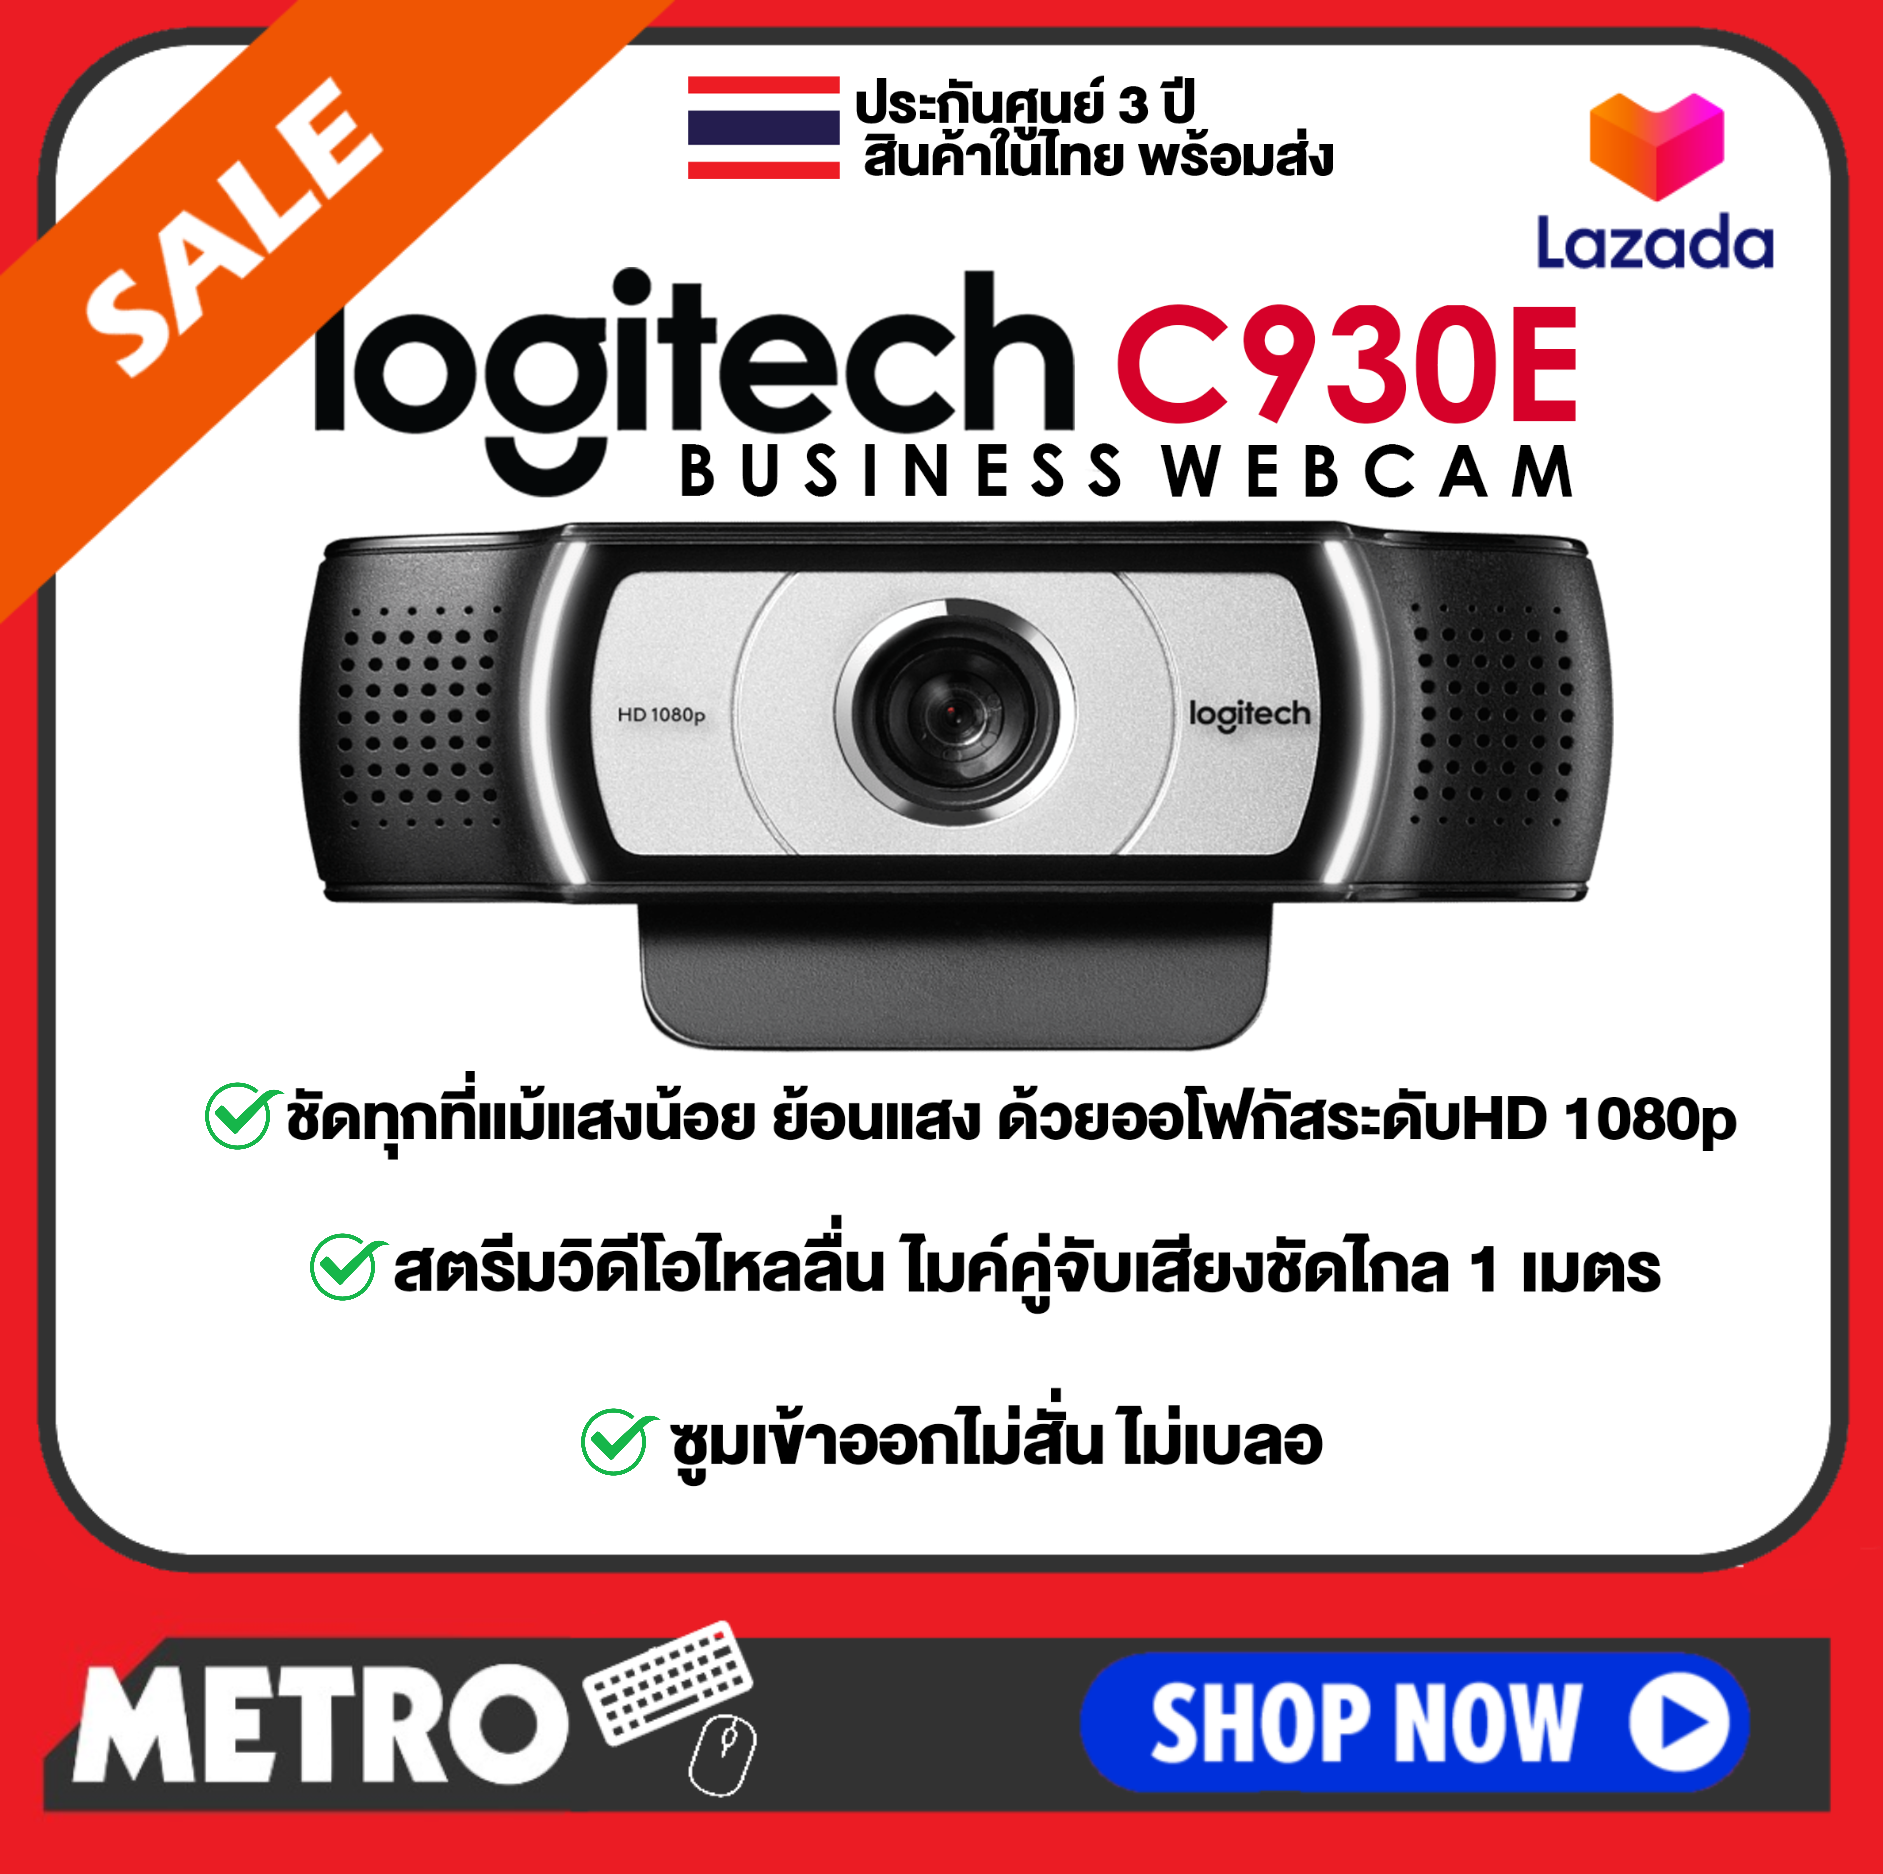 Logitech C930e Logitech Webcam Logitech Business Webcam โลจิเทค กล้องเวปแคม ประกันศูนย์ Logitech 3 ปี by METRO MET5